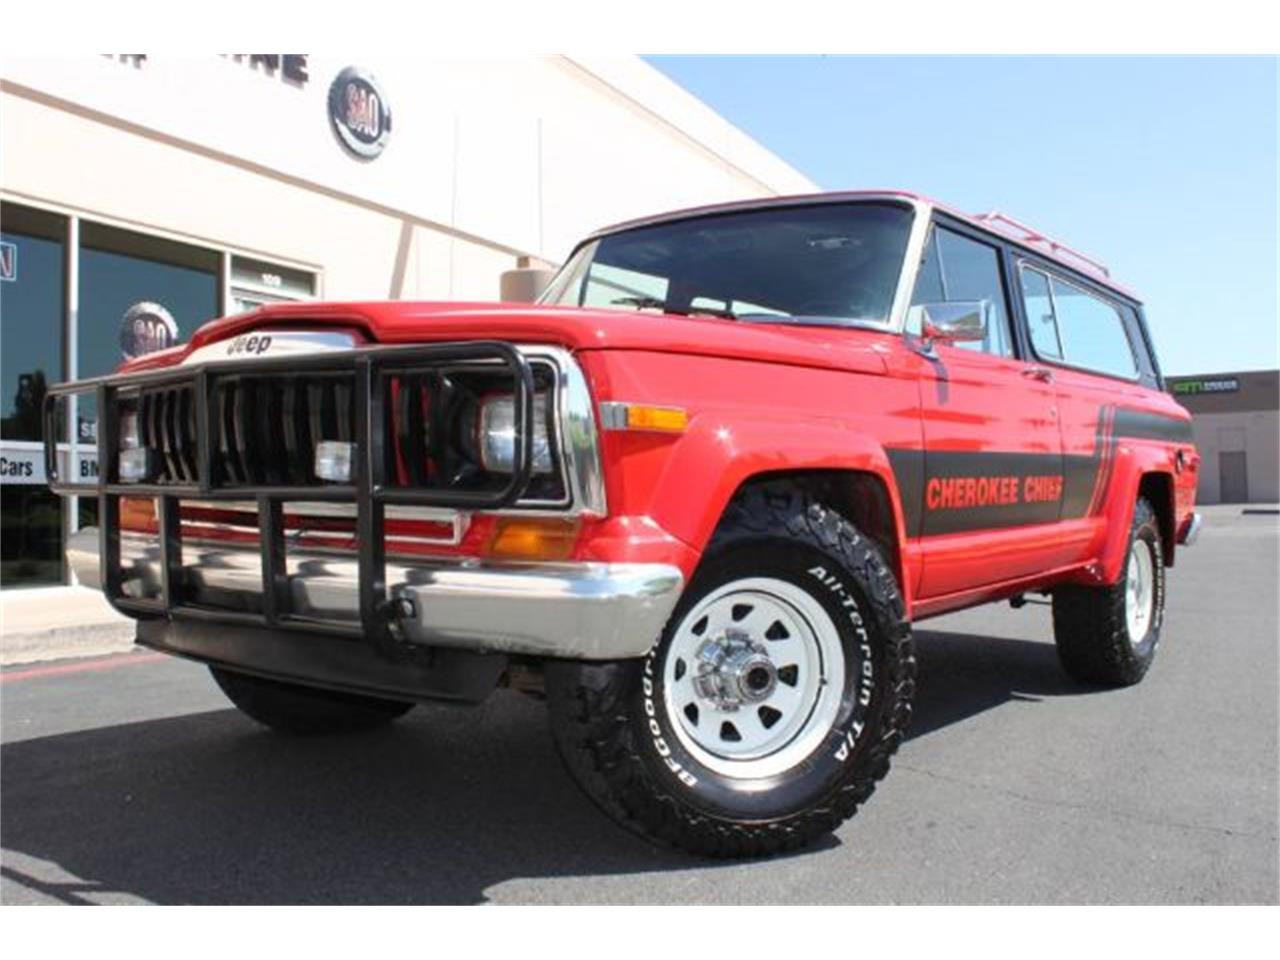 for sale 1983 jeep cherokee in scottsdale, arizona cars - scottsdale, az at geebo